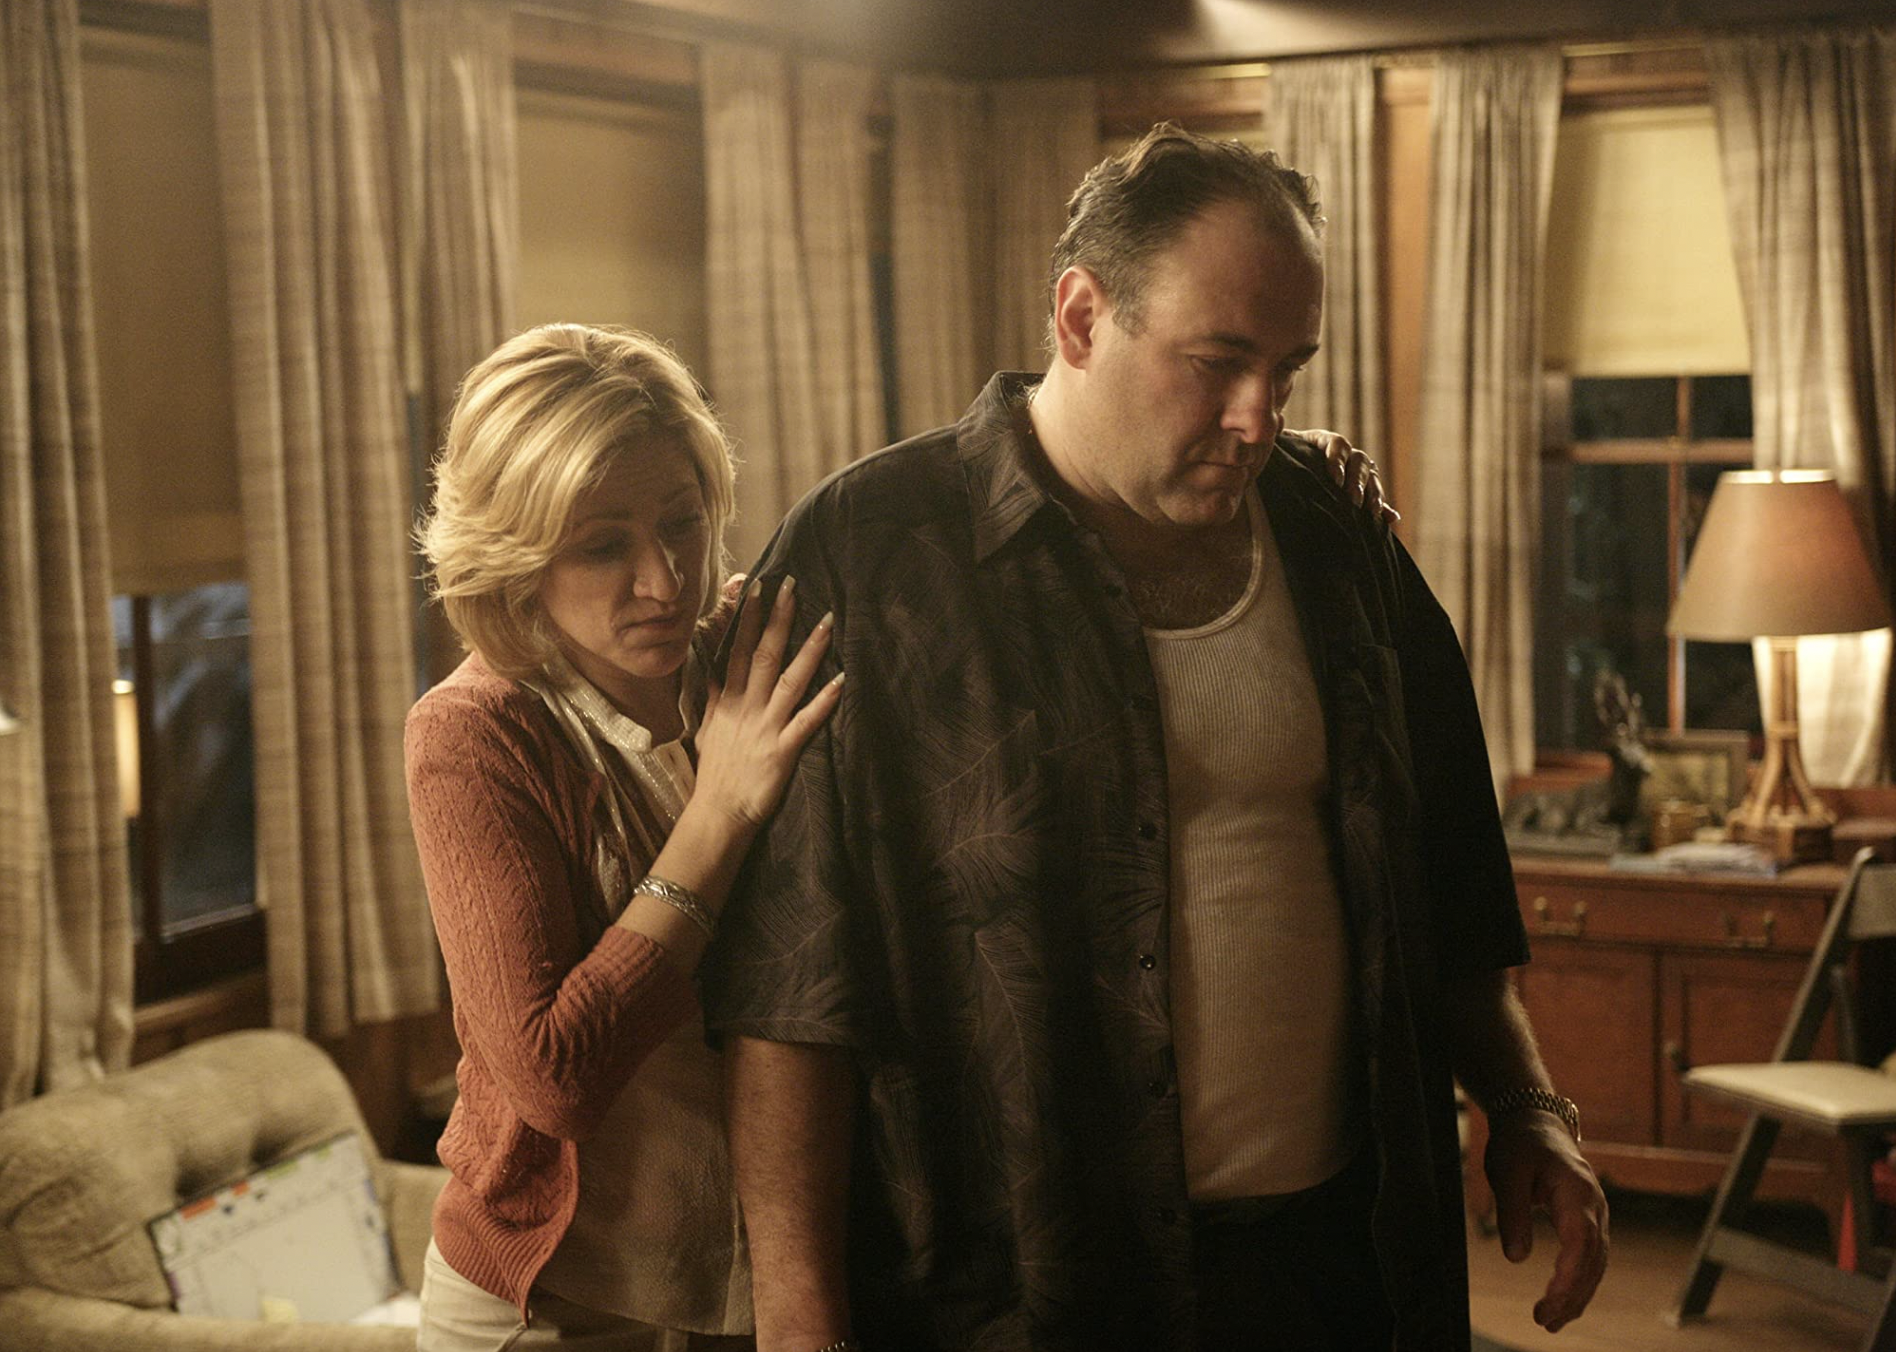 James Gandolfini and Edie Falco in "The Sopranos".